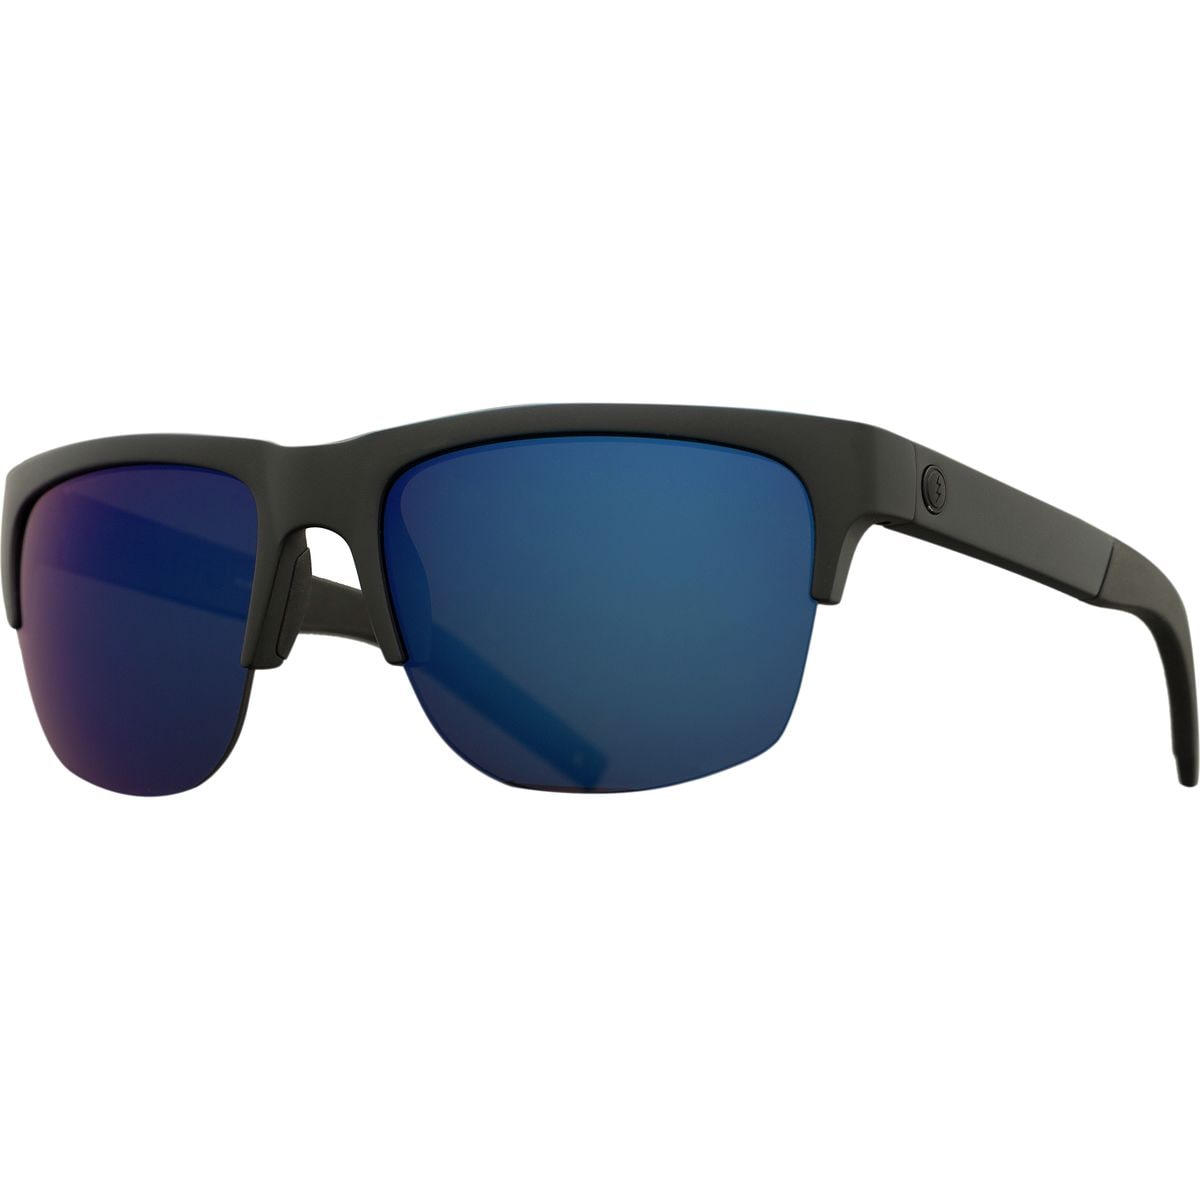 Electric Knoxville Pro Polarized Sunglasses - Men's